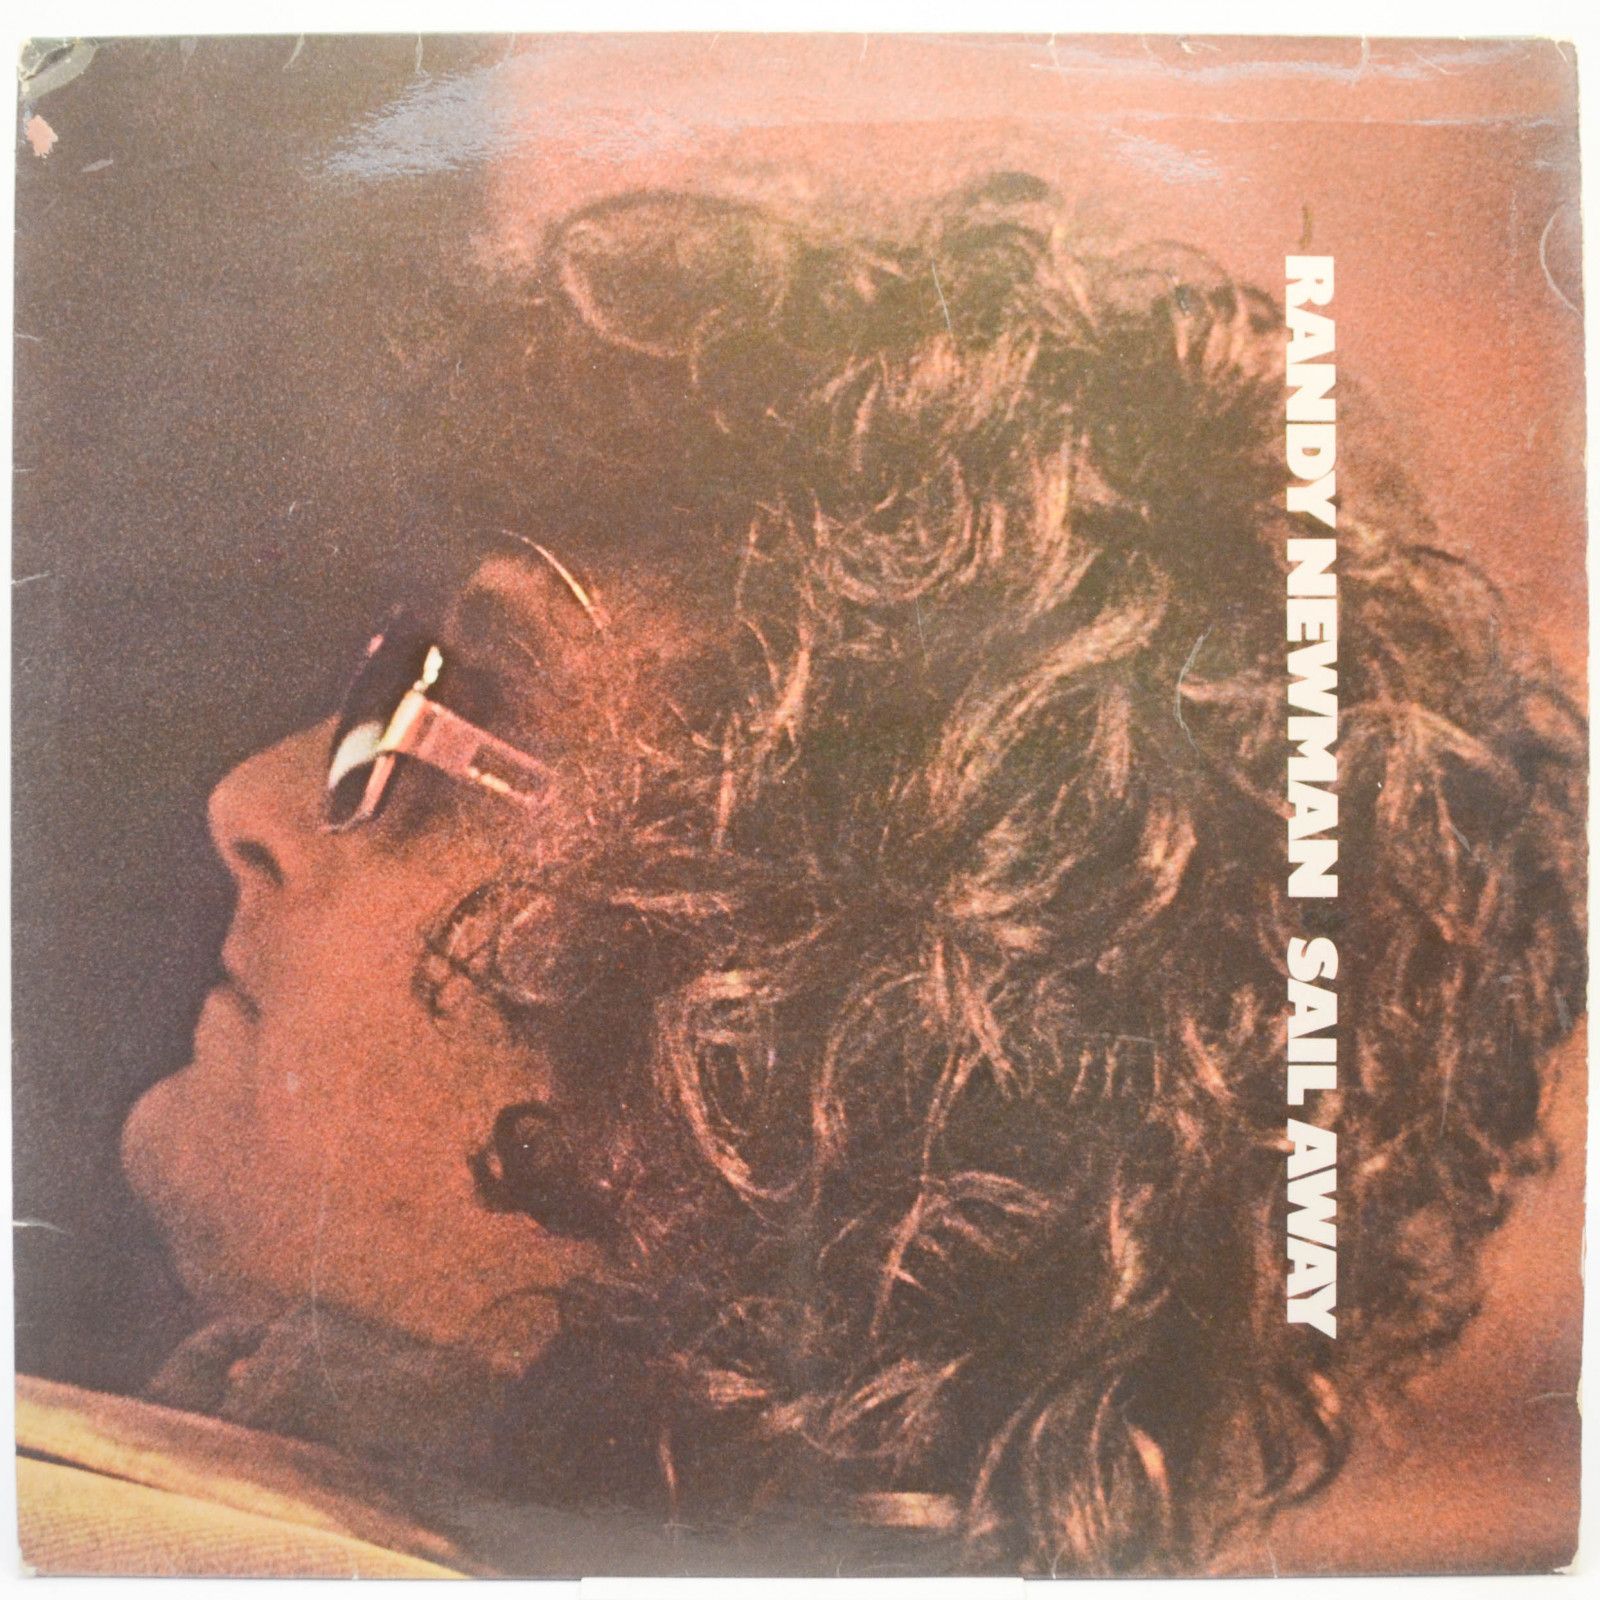 Randy Newman — Sail Away, 1972